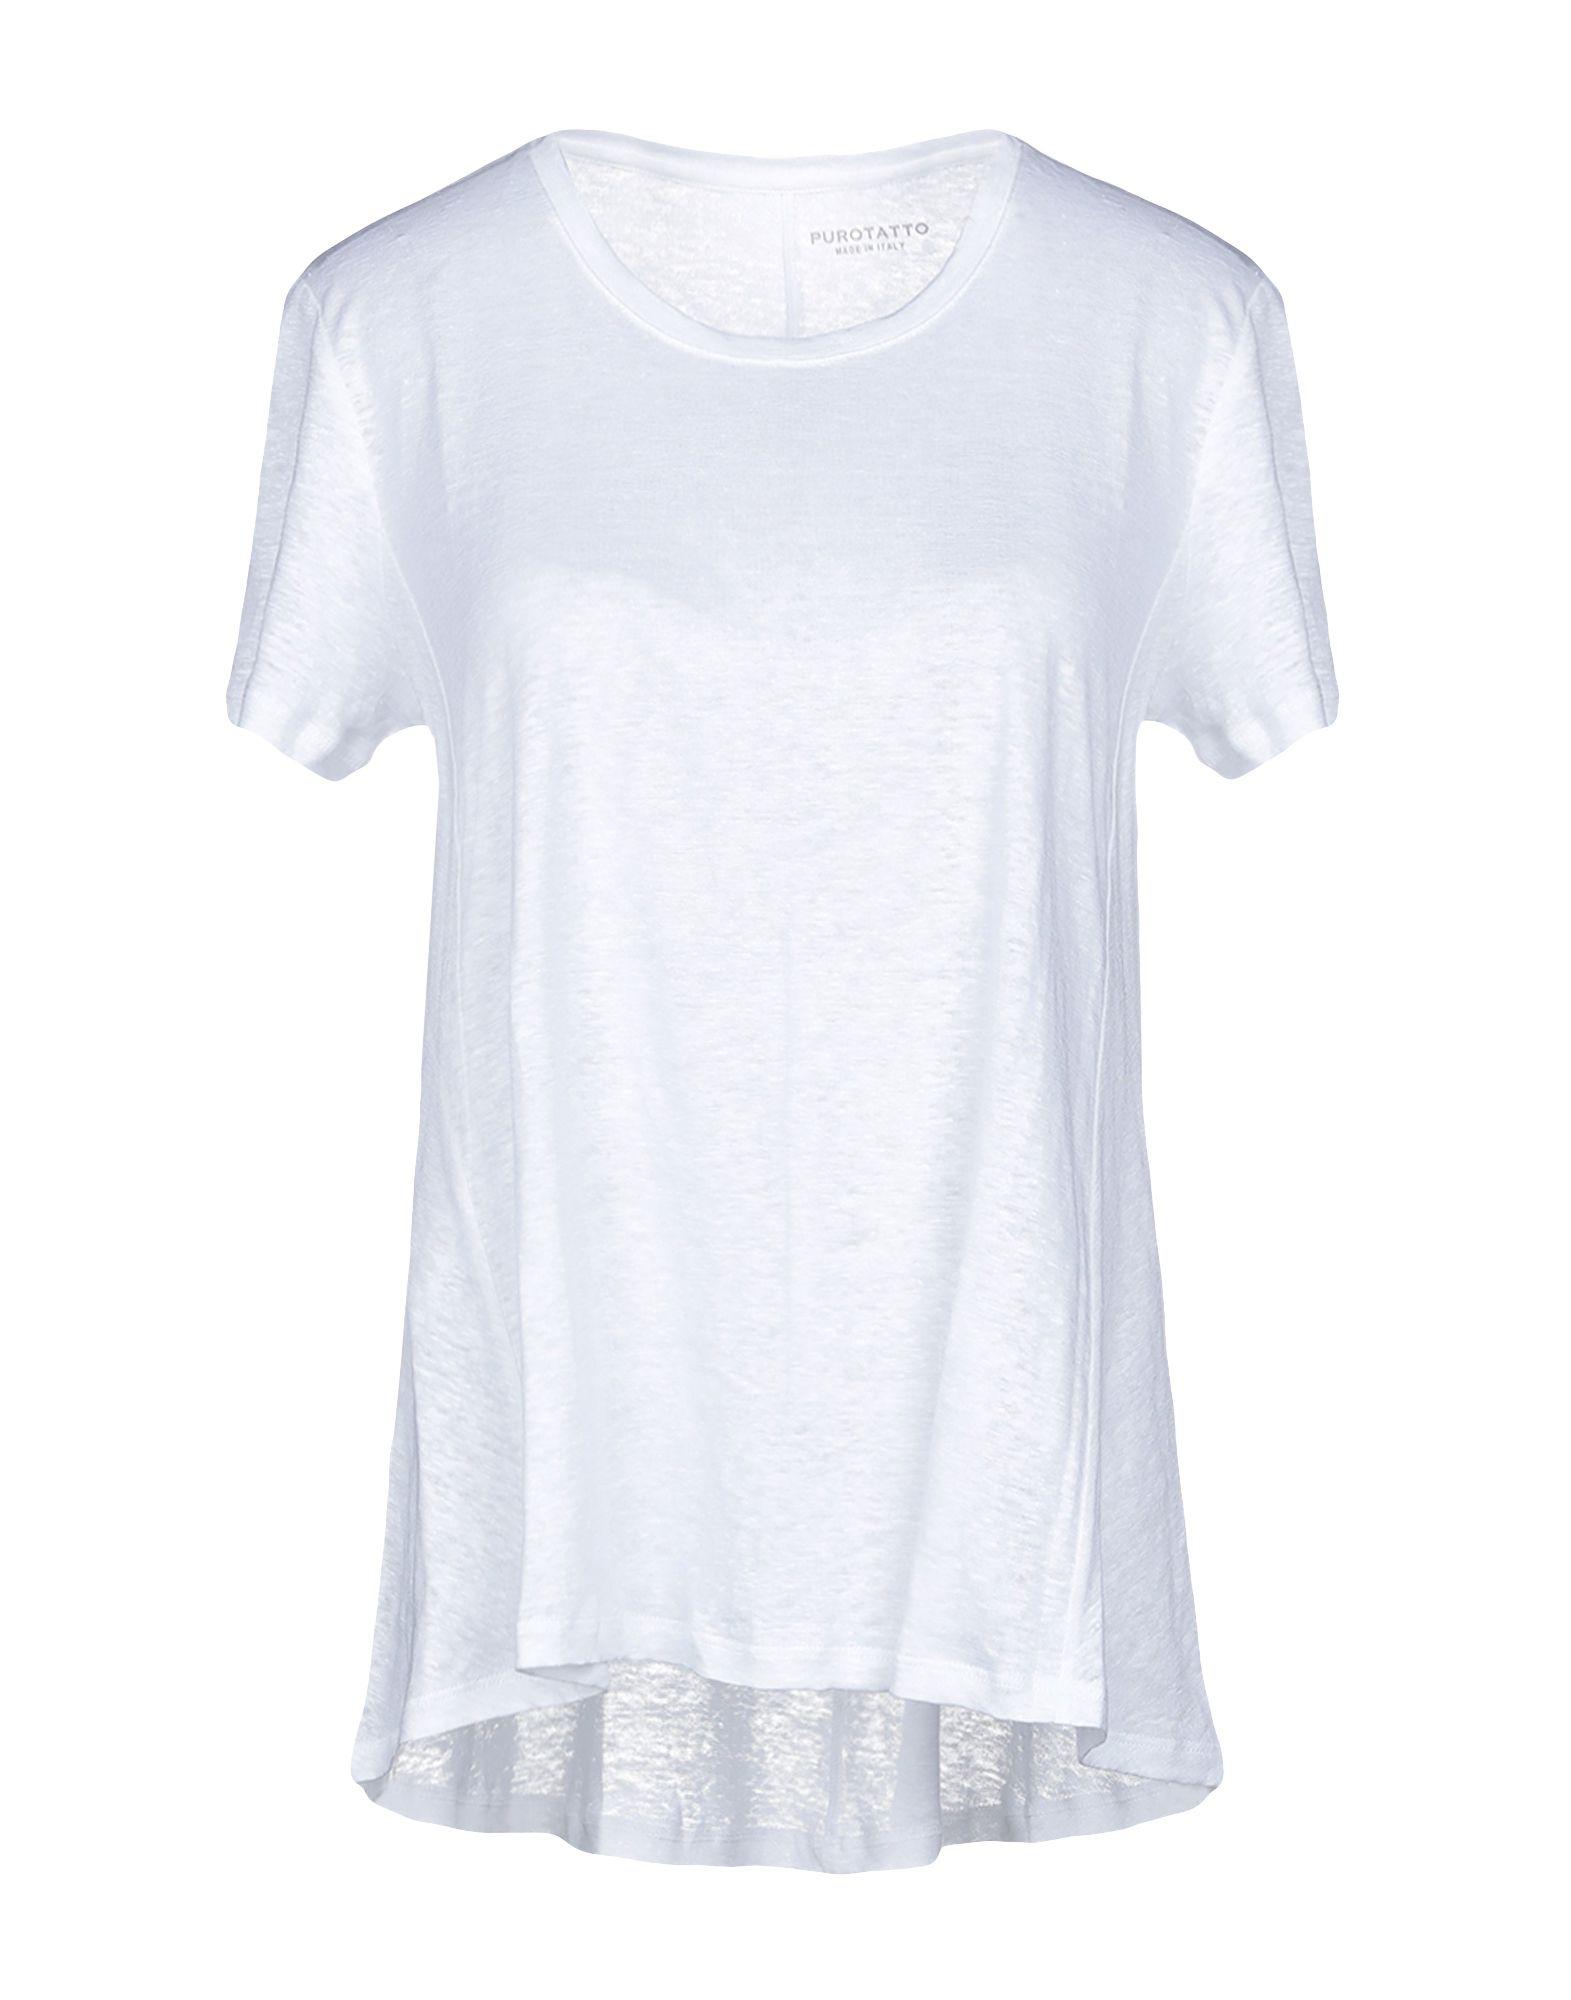 Purotatto Linen T-shirt in White - Lyst